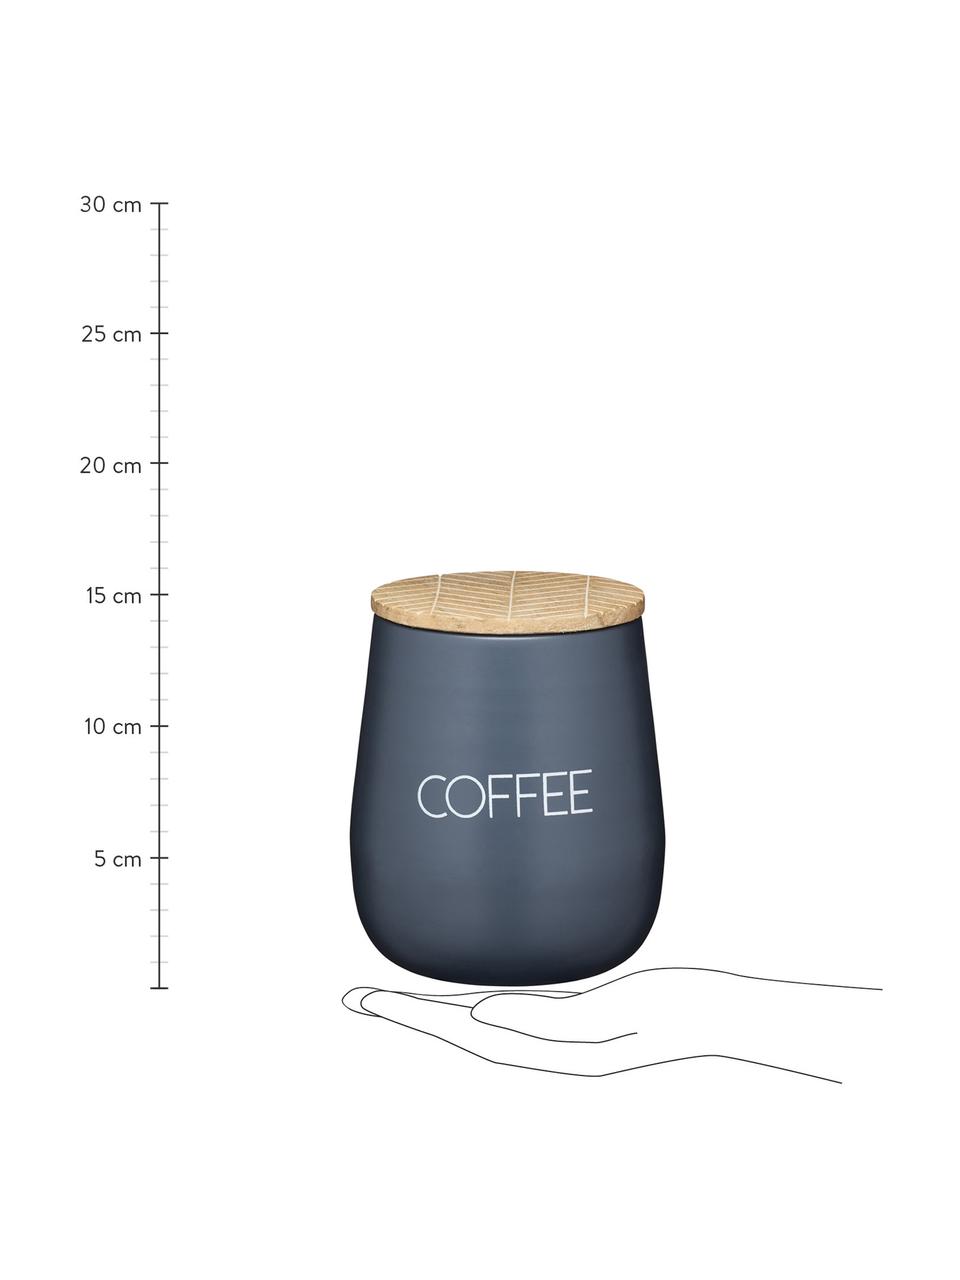 Dóza Serenity Coffee, Ø 13 cm x V 15 cm, Antracitová, dřevo, Ø 13 cm, V 15 cm, 1,6 l